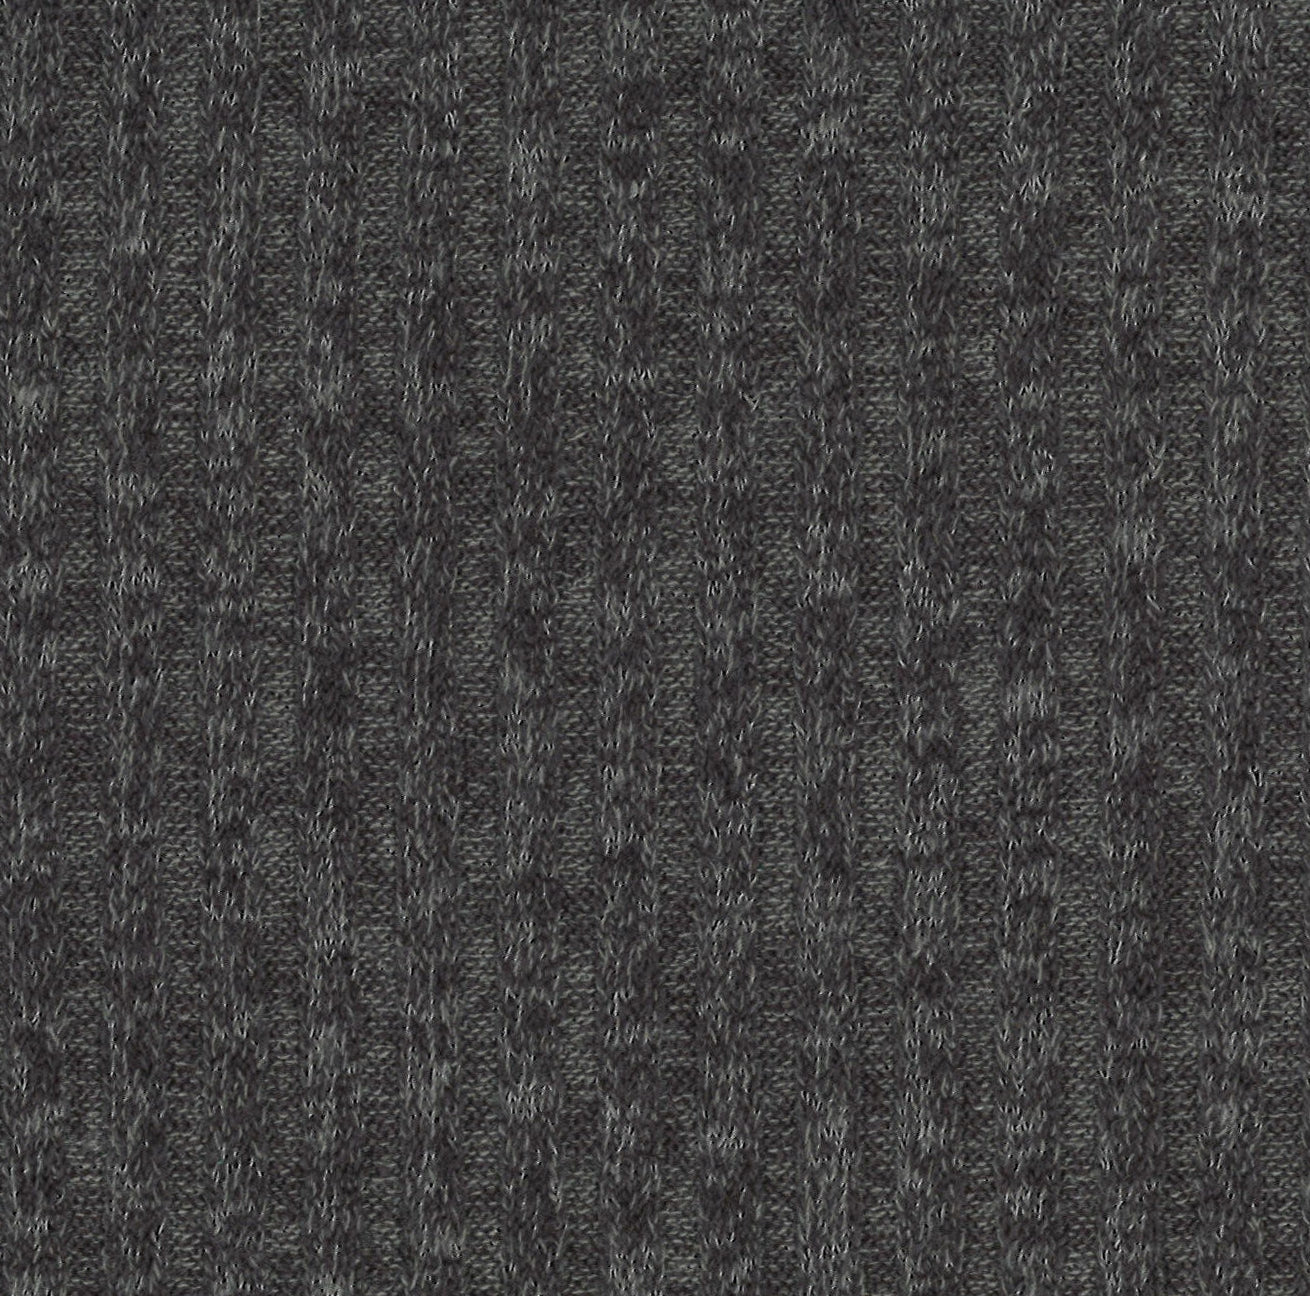 15012-09 Grey Marl Rib Plain Dyed Blend 330g/yd 54&quot; blend grey knit plain dyed polyester rayon rib spandex Solid Color, Rib - knit fabric - woven fabric - fabric company - fabric wholesale - fabric b2b - fabric factory - high quality fabric - hong kong fabric - fabric hk - acetate fabric - cotton fabric - linen fabric - metallic fabric - nylon fabric - polyester fabric - spandex fabric - chun wing hing - cwh hk - fabric worldwide ship - 針織布 - 梳織布 - 布料公司- 布料批發 - 香港布料 - 秦榮興